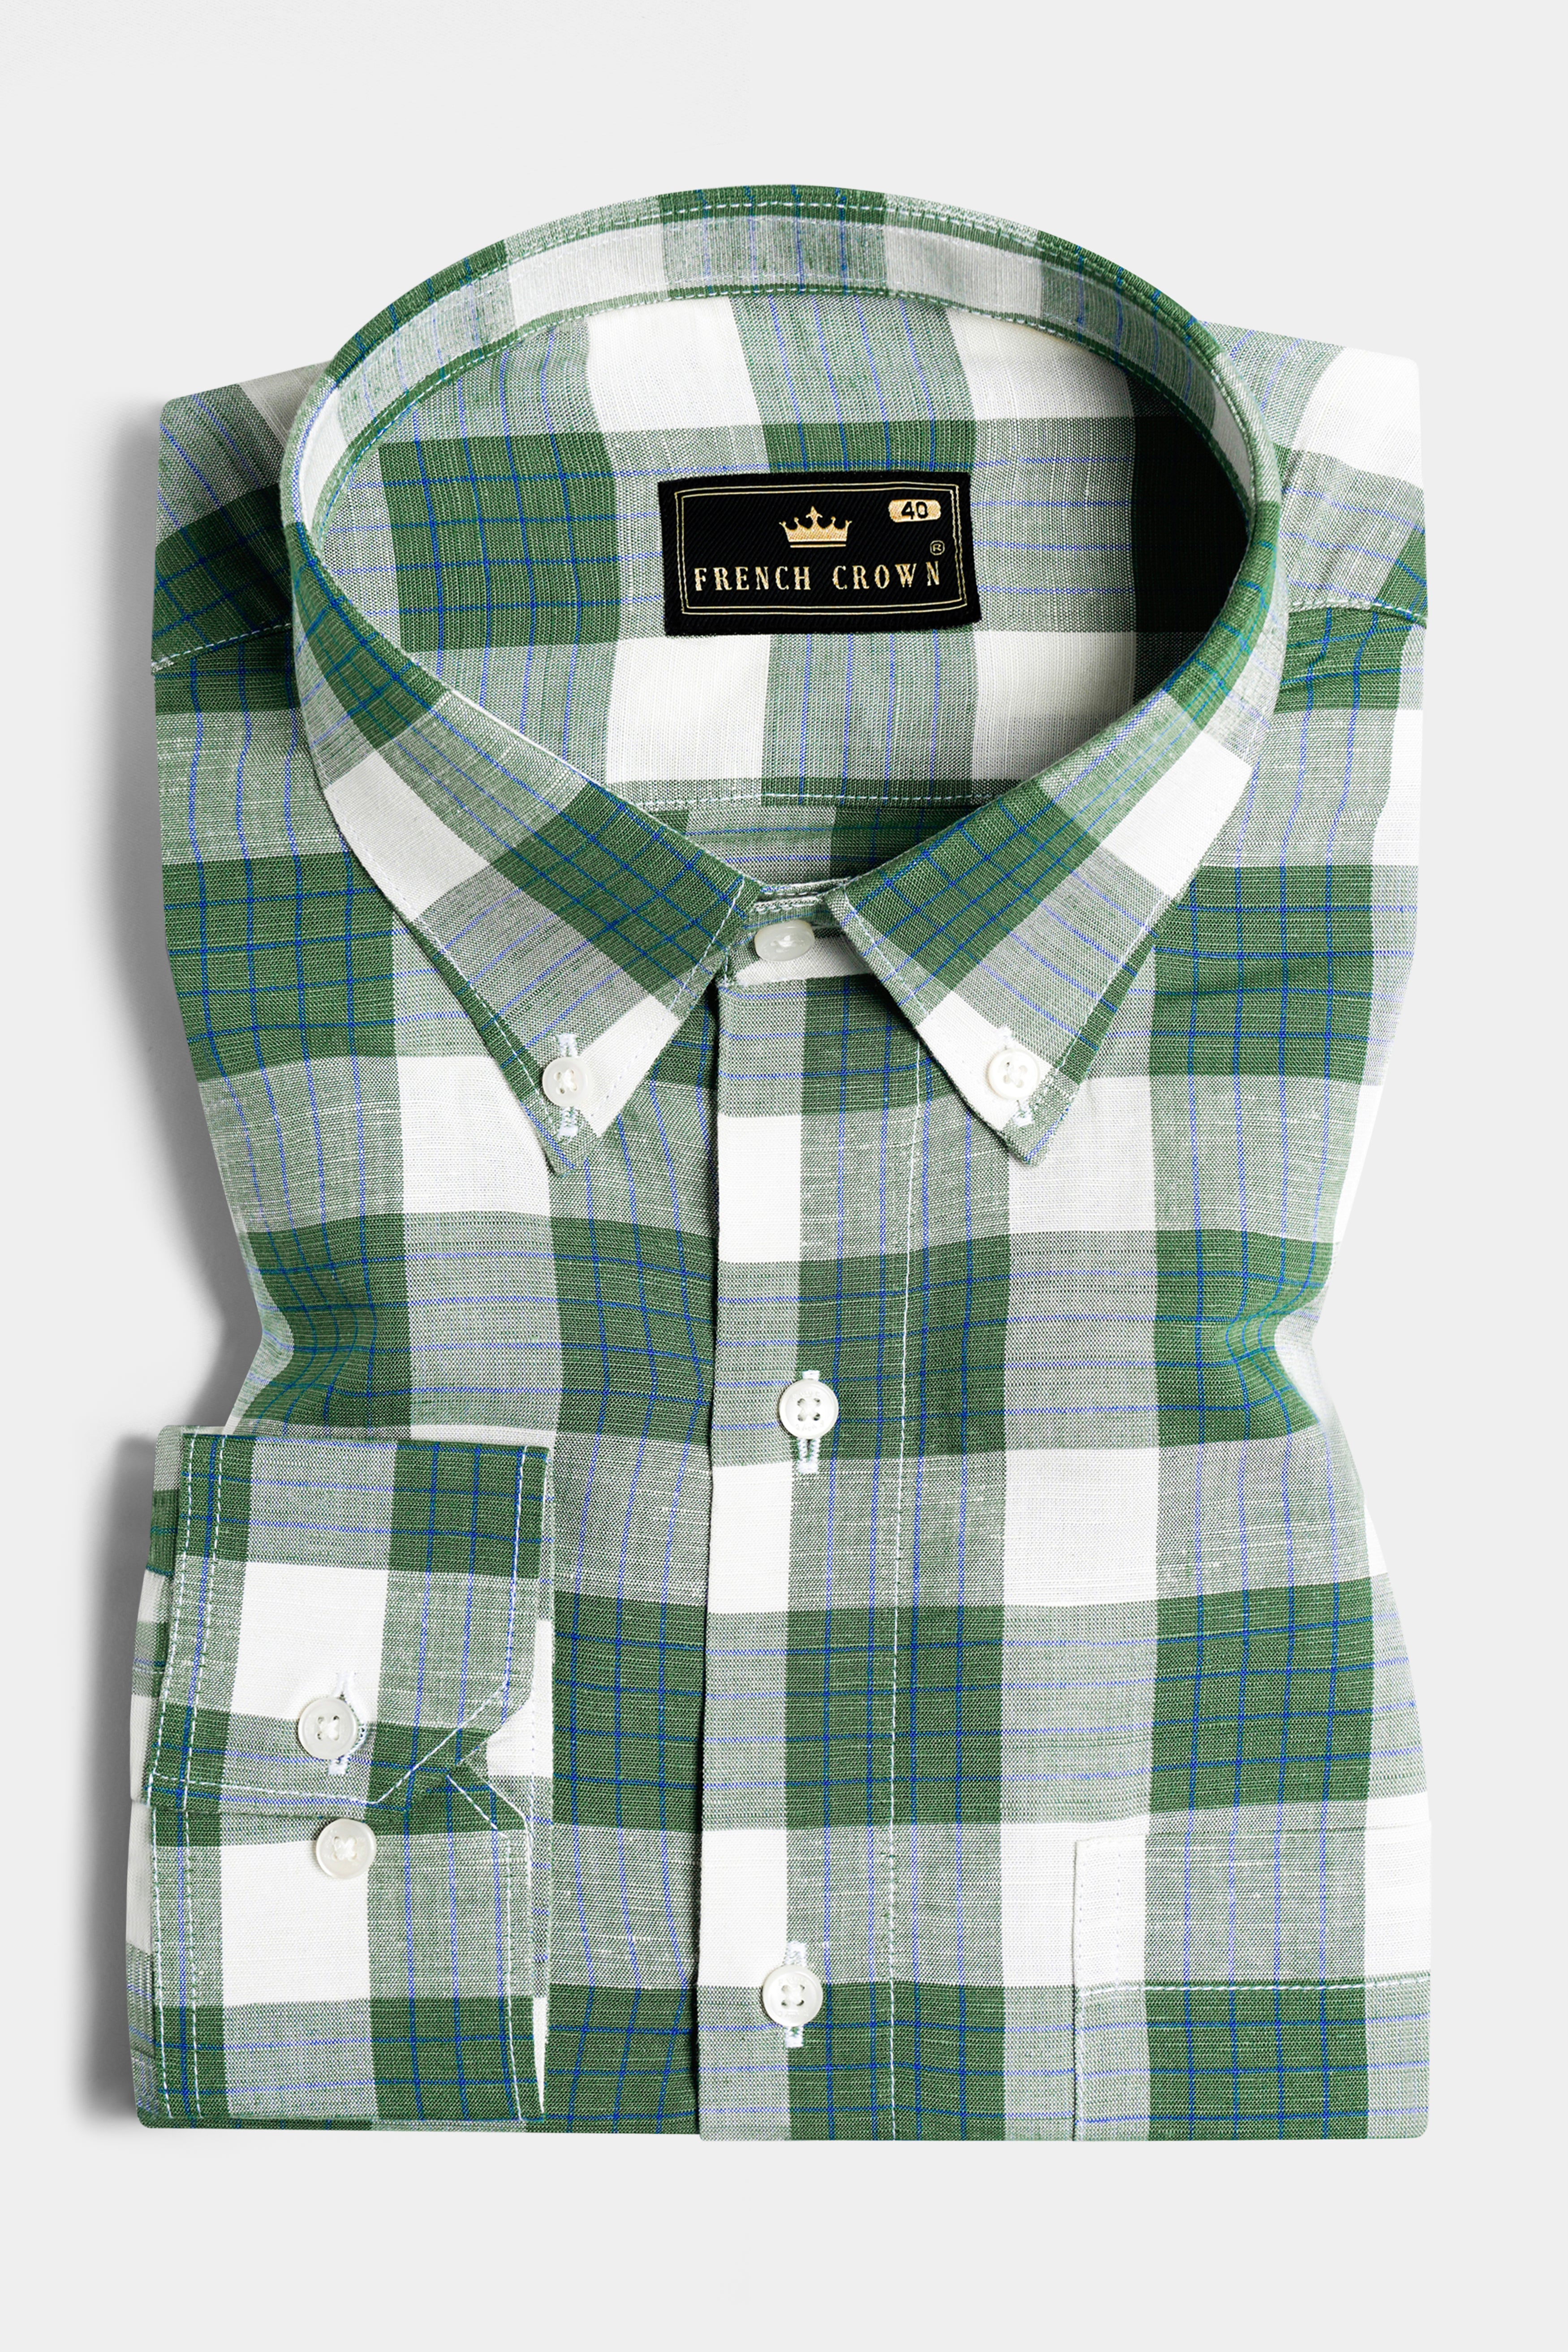 Pine Green and Pumice Gray Checkered Luxurious Linen Shirt